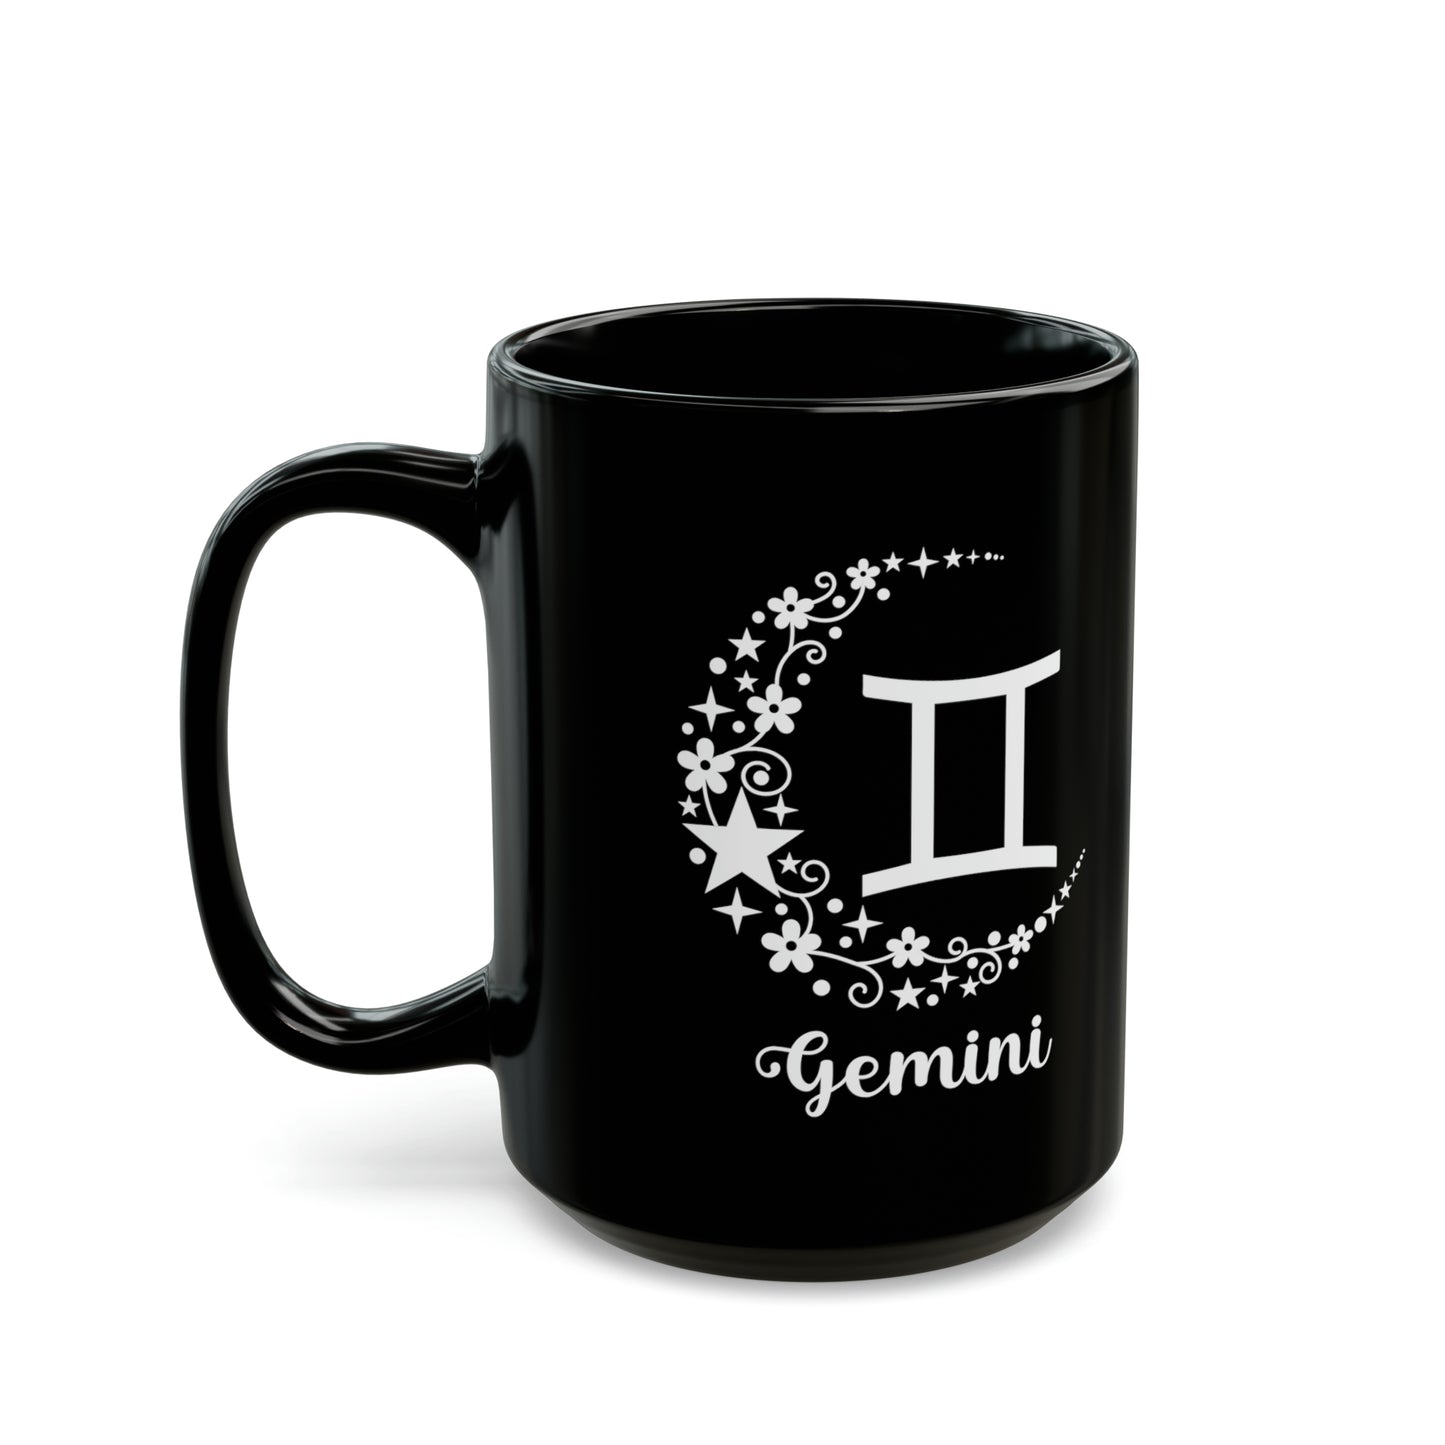 Gemini crescent moon mug